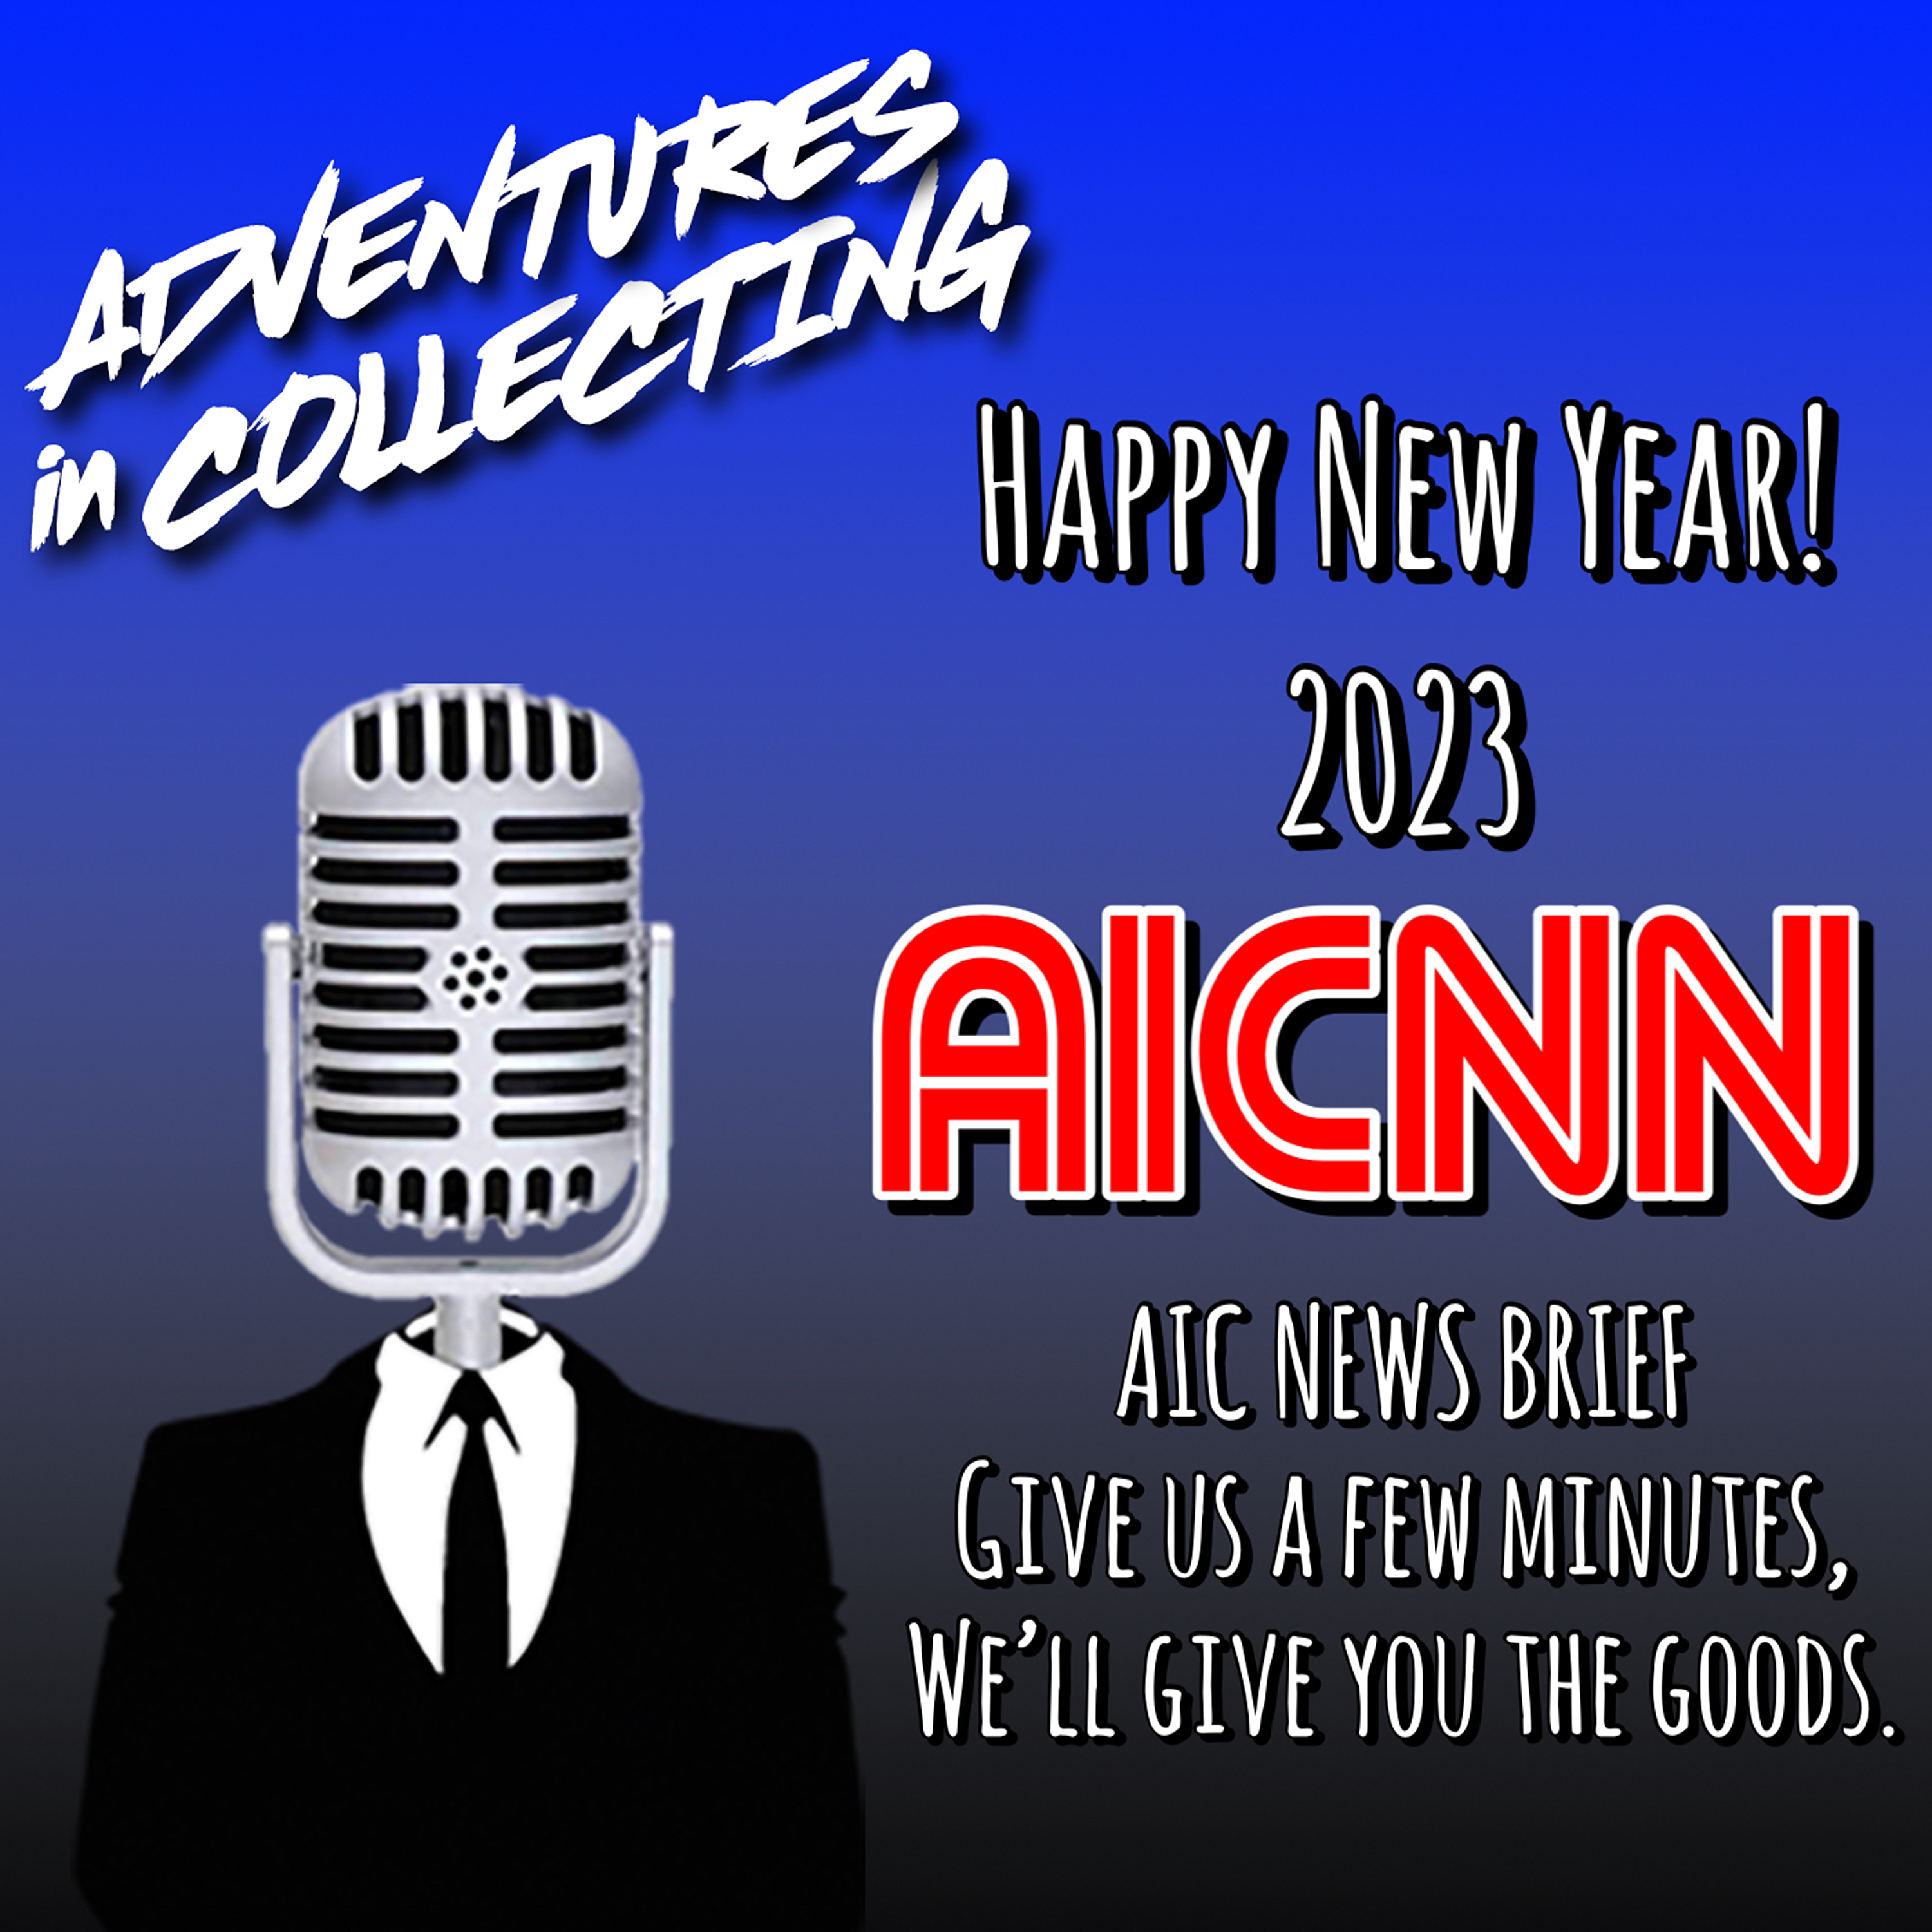 AIC NEWS: Happy New Year 2023!